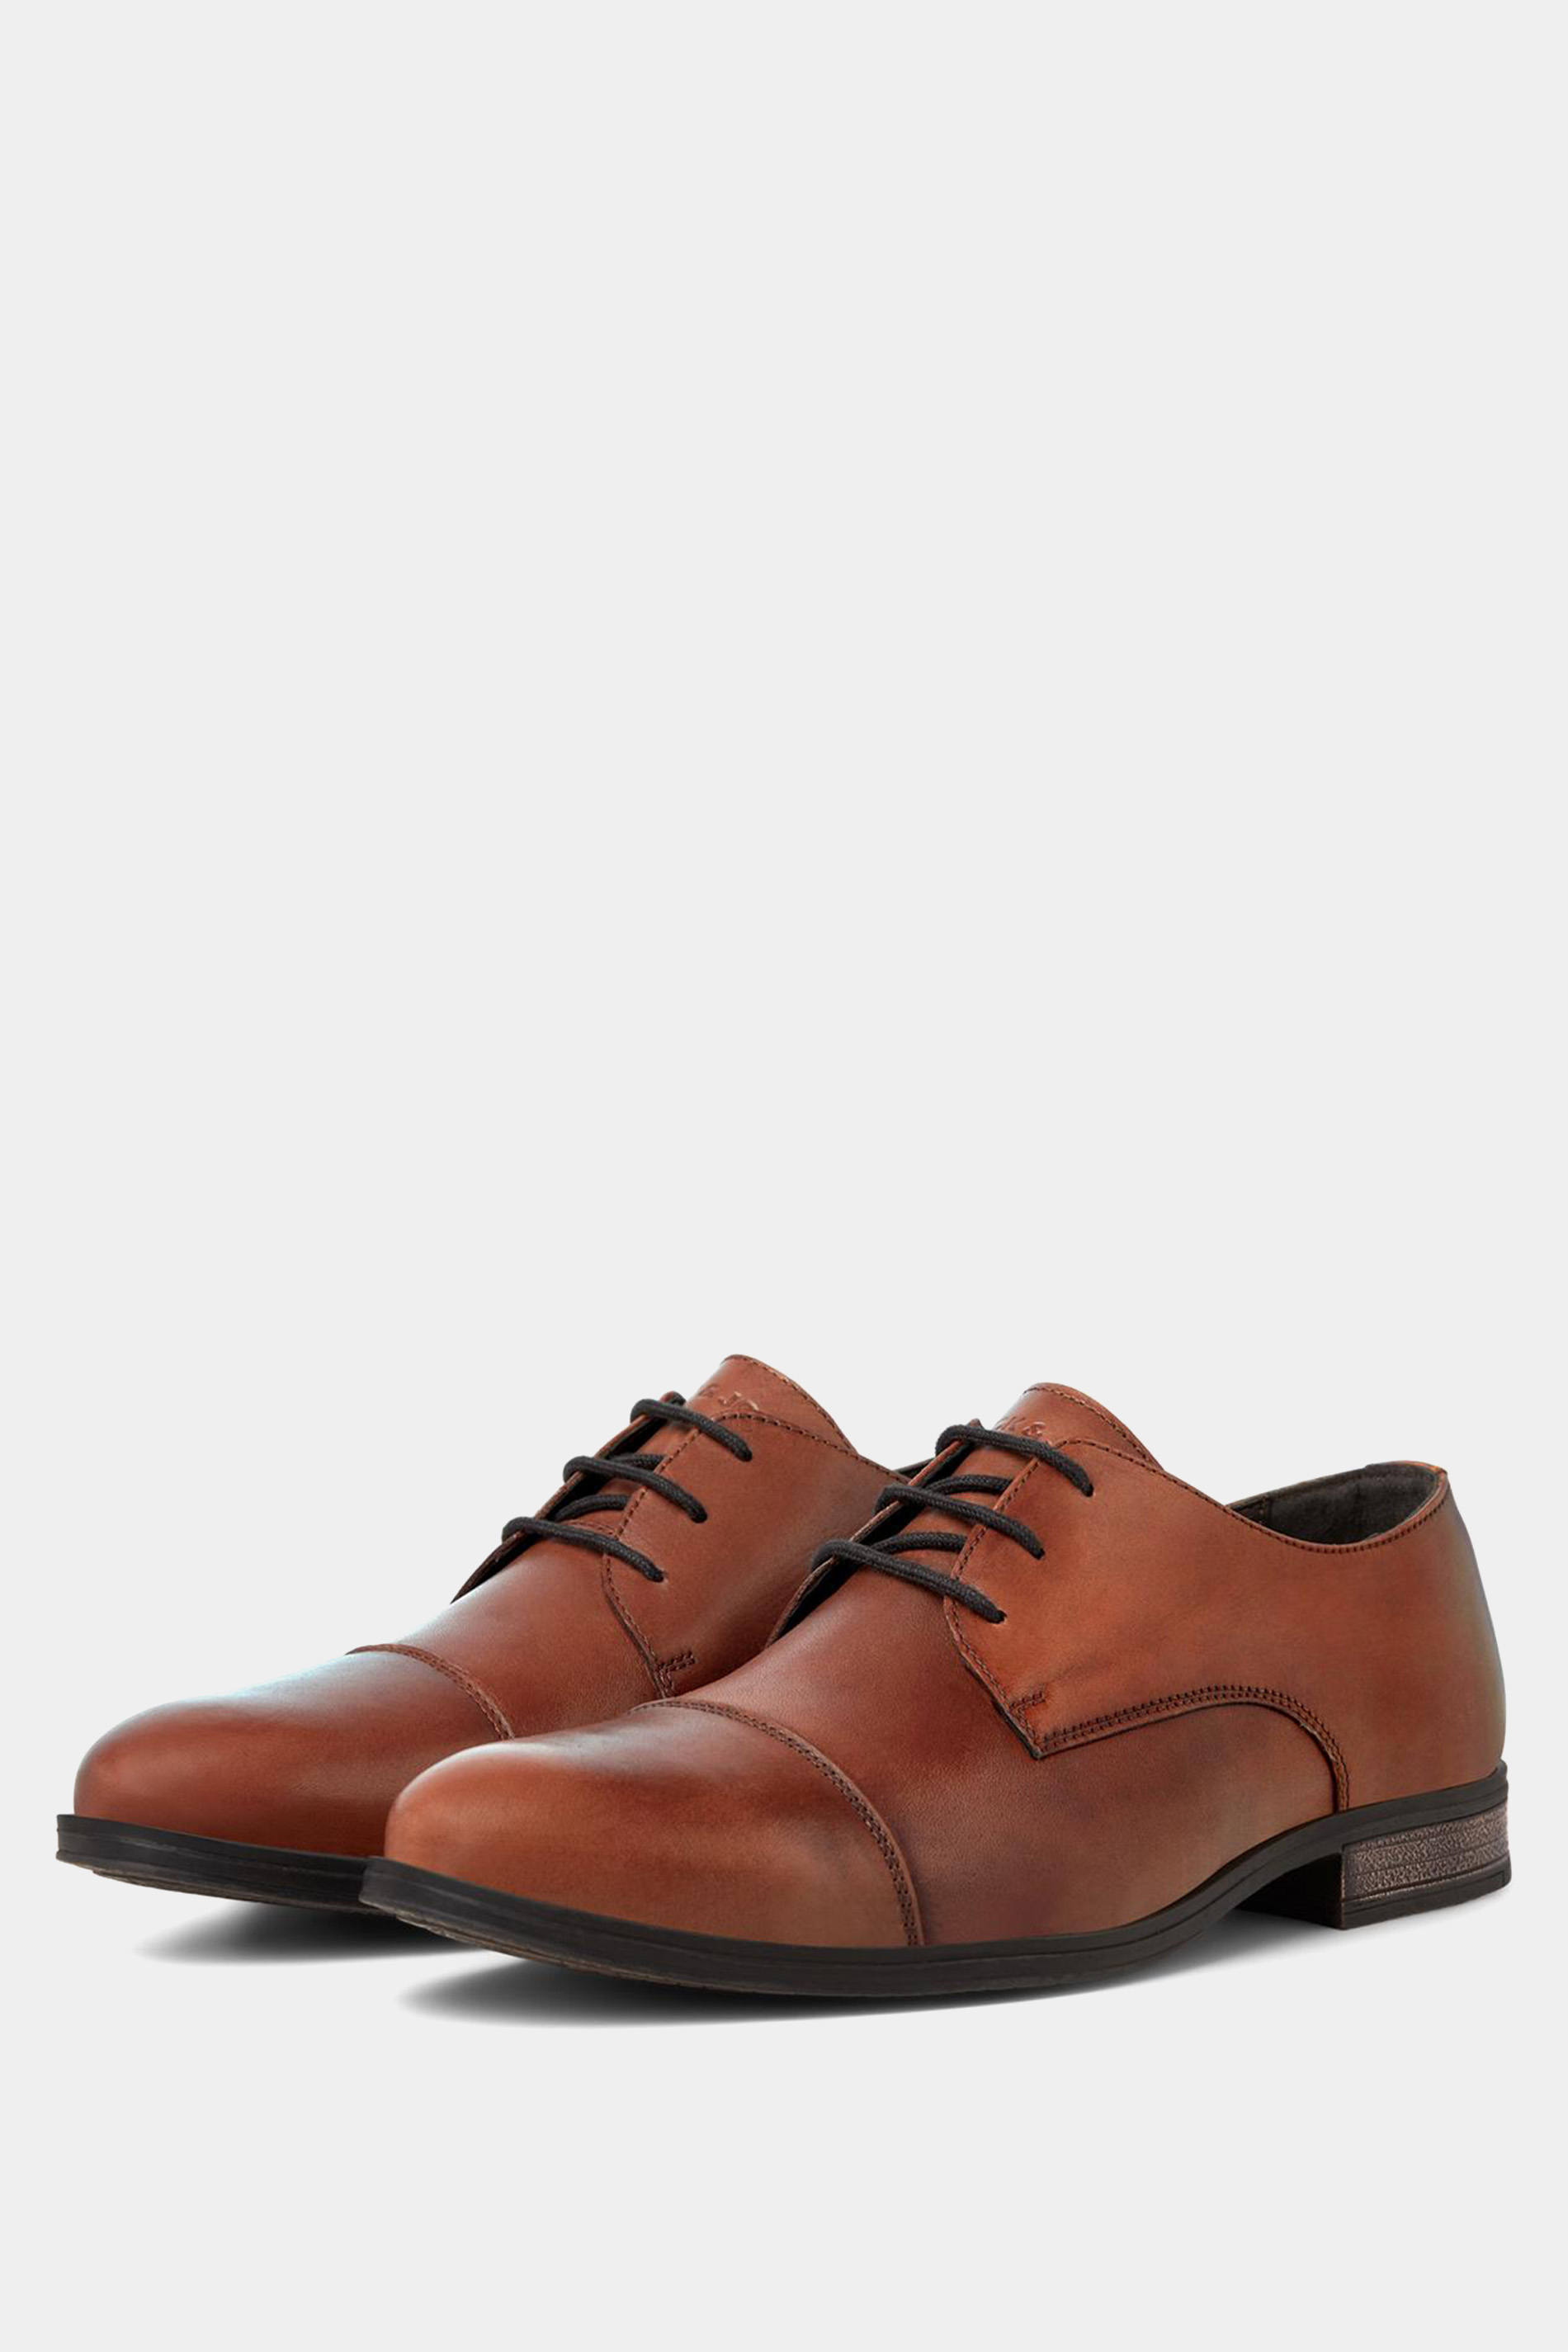 JACK & JONES Big & Tall Brown Leather Derby Shoes | BadRhino 1